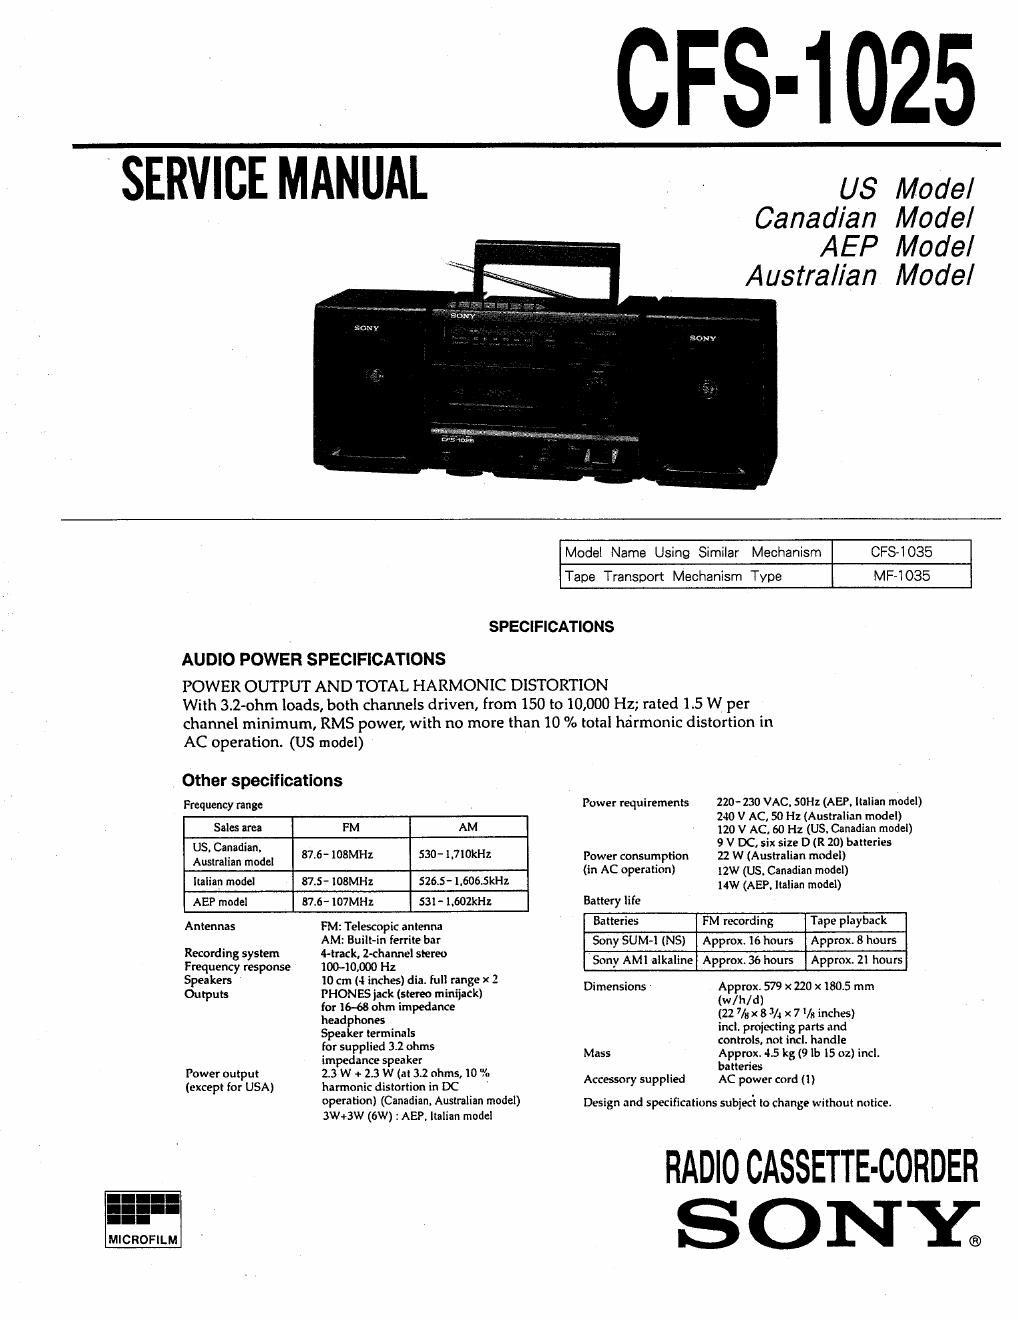 sony cfs 1025 service manual